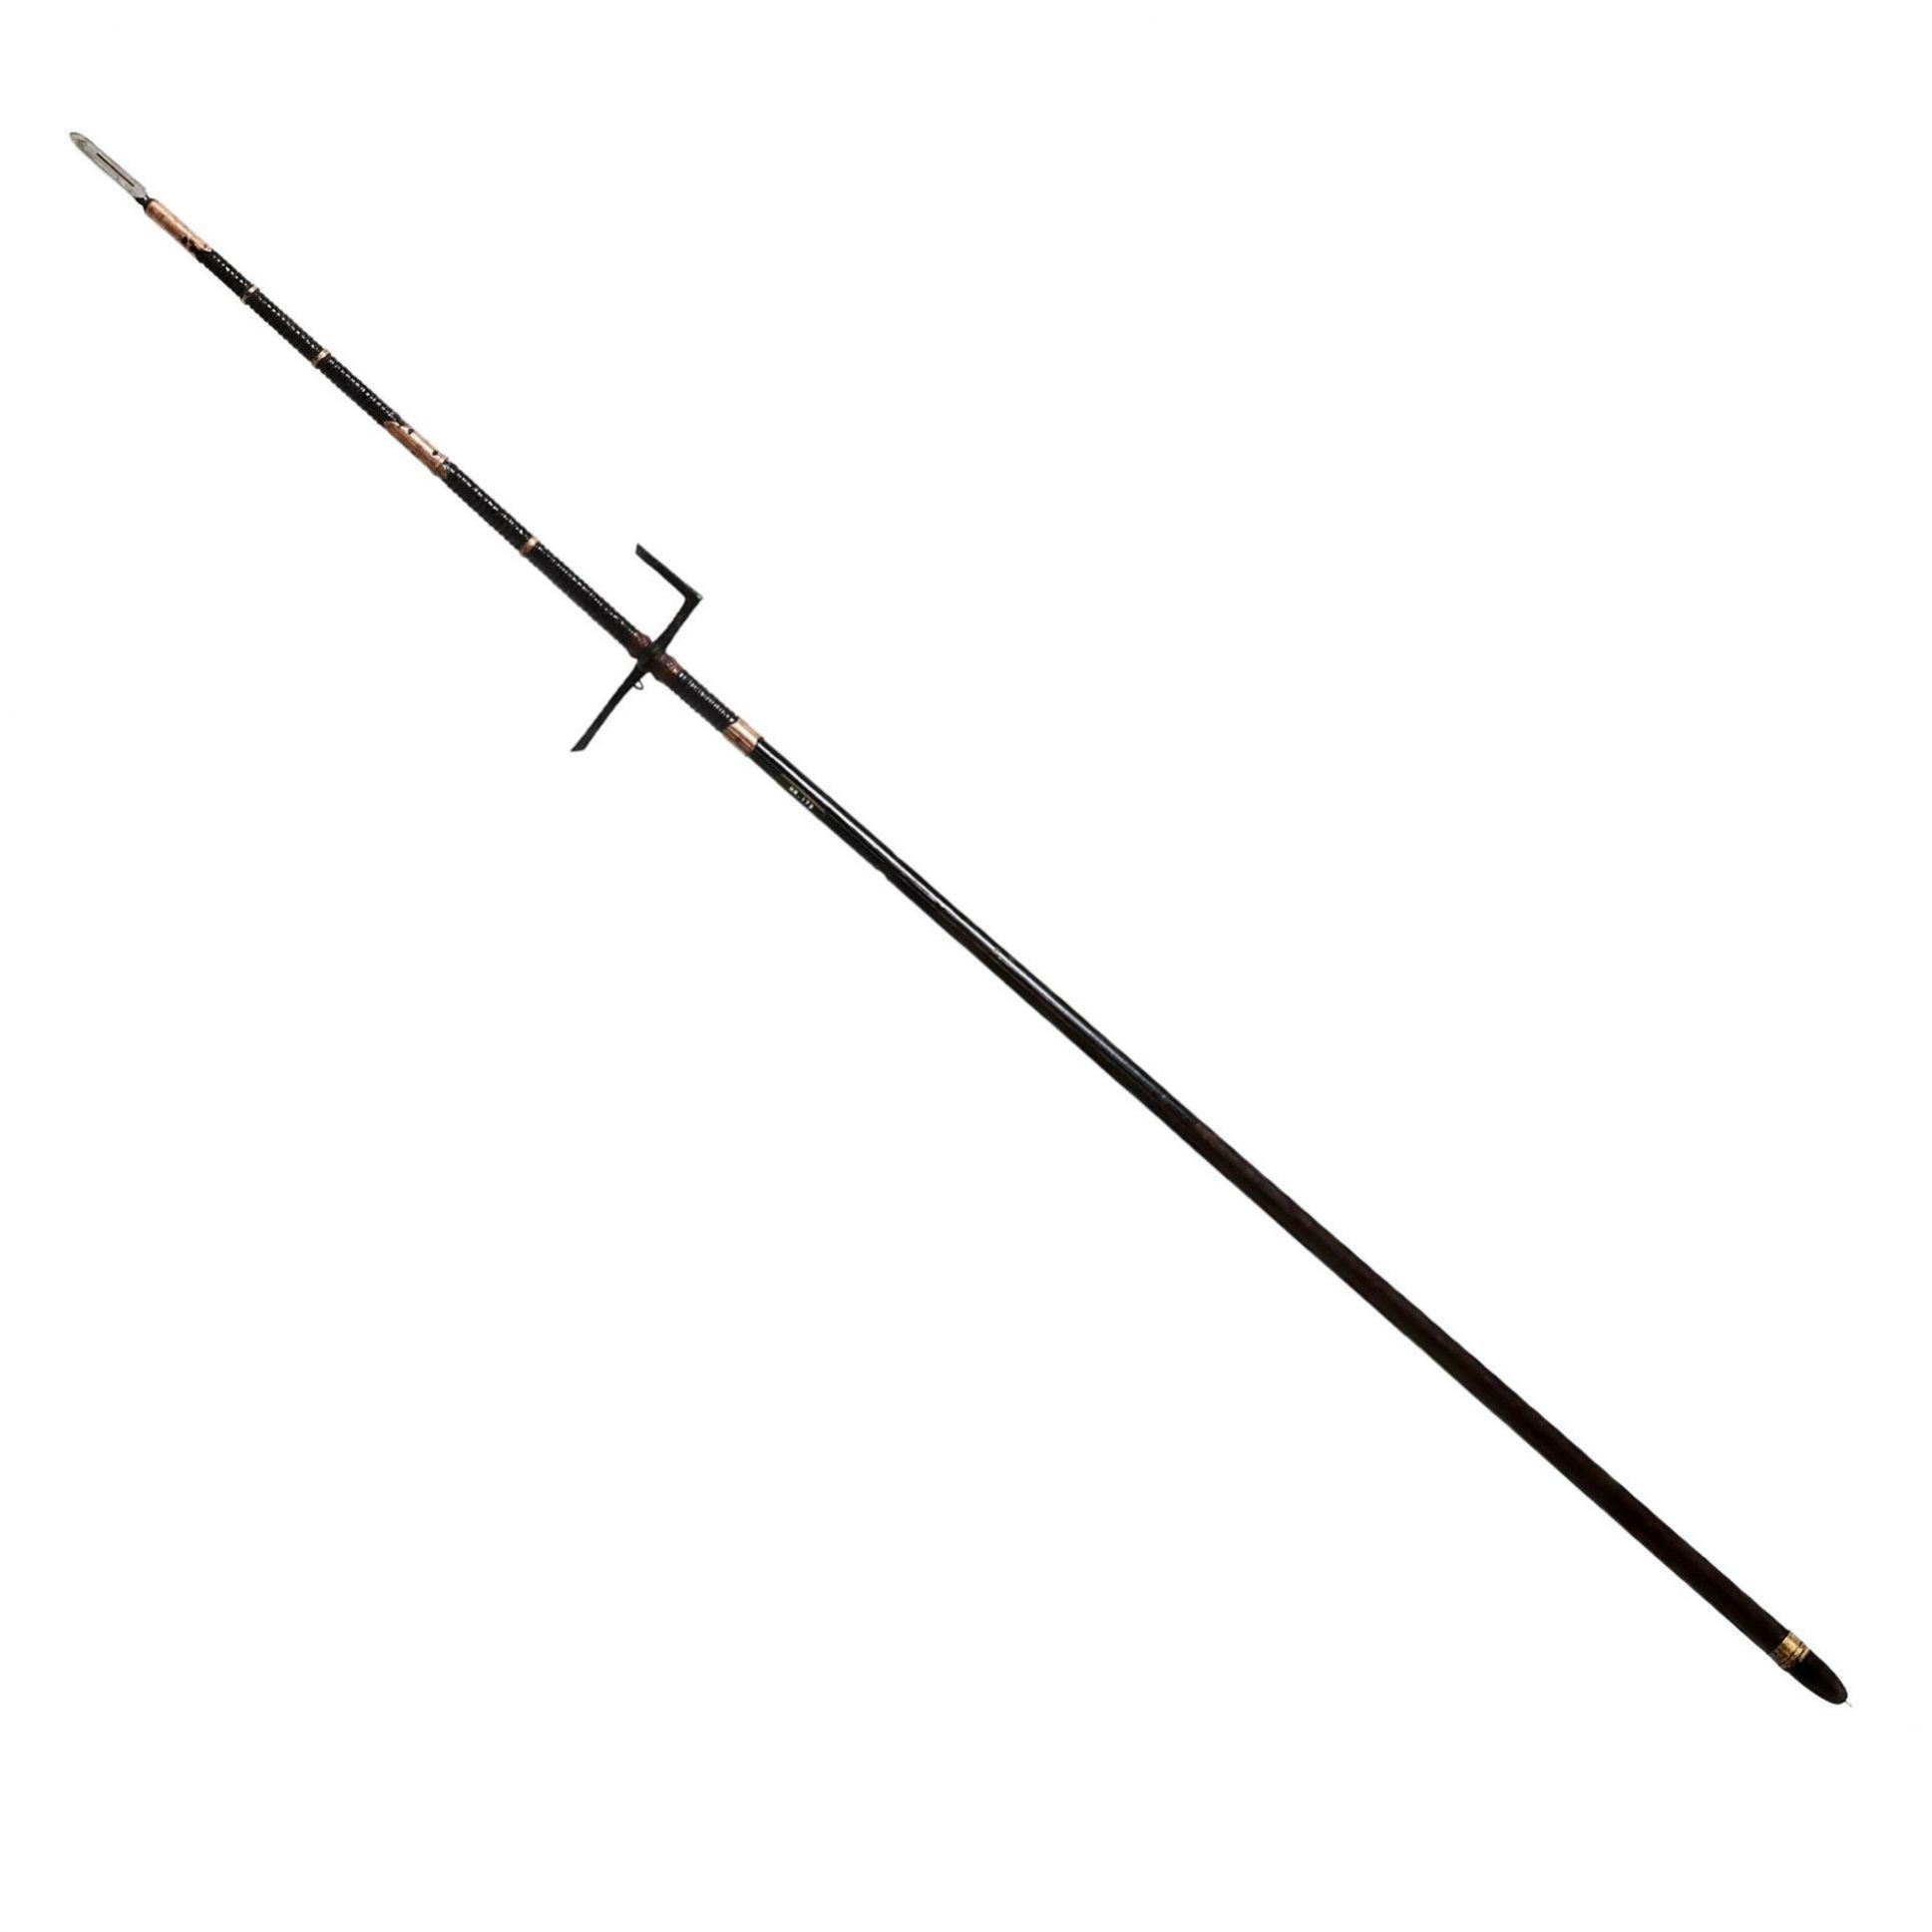 Spear-of-Kagi-yari-Japan-Edo-period-1781-1876-